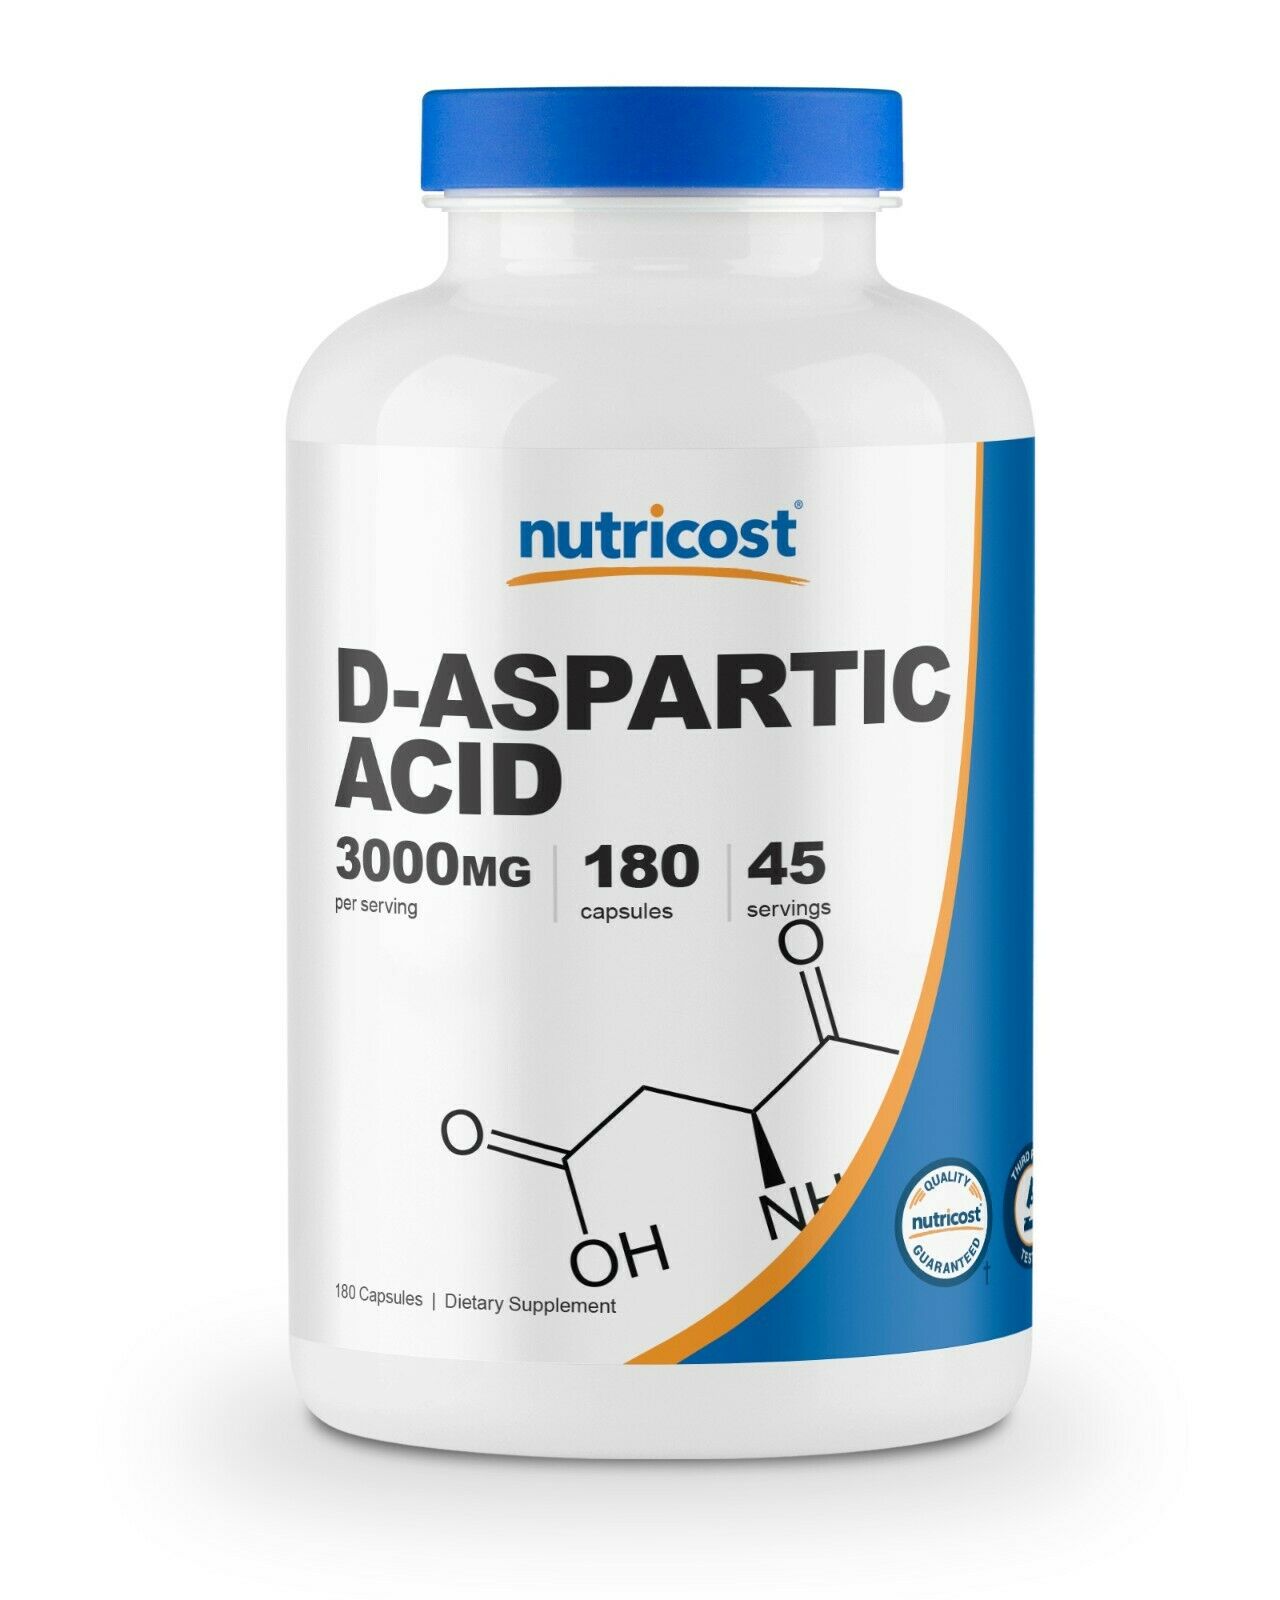 Nutricost D-aspartic Acid Capsules (180 Capsules) (3000mg Serving)